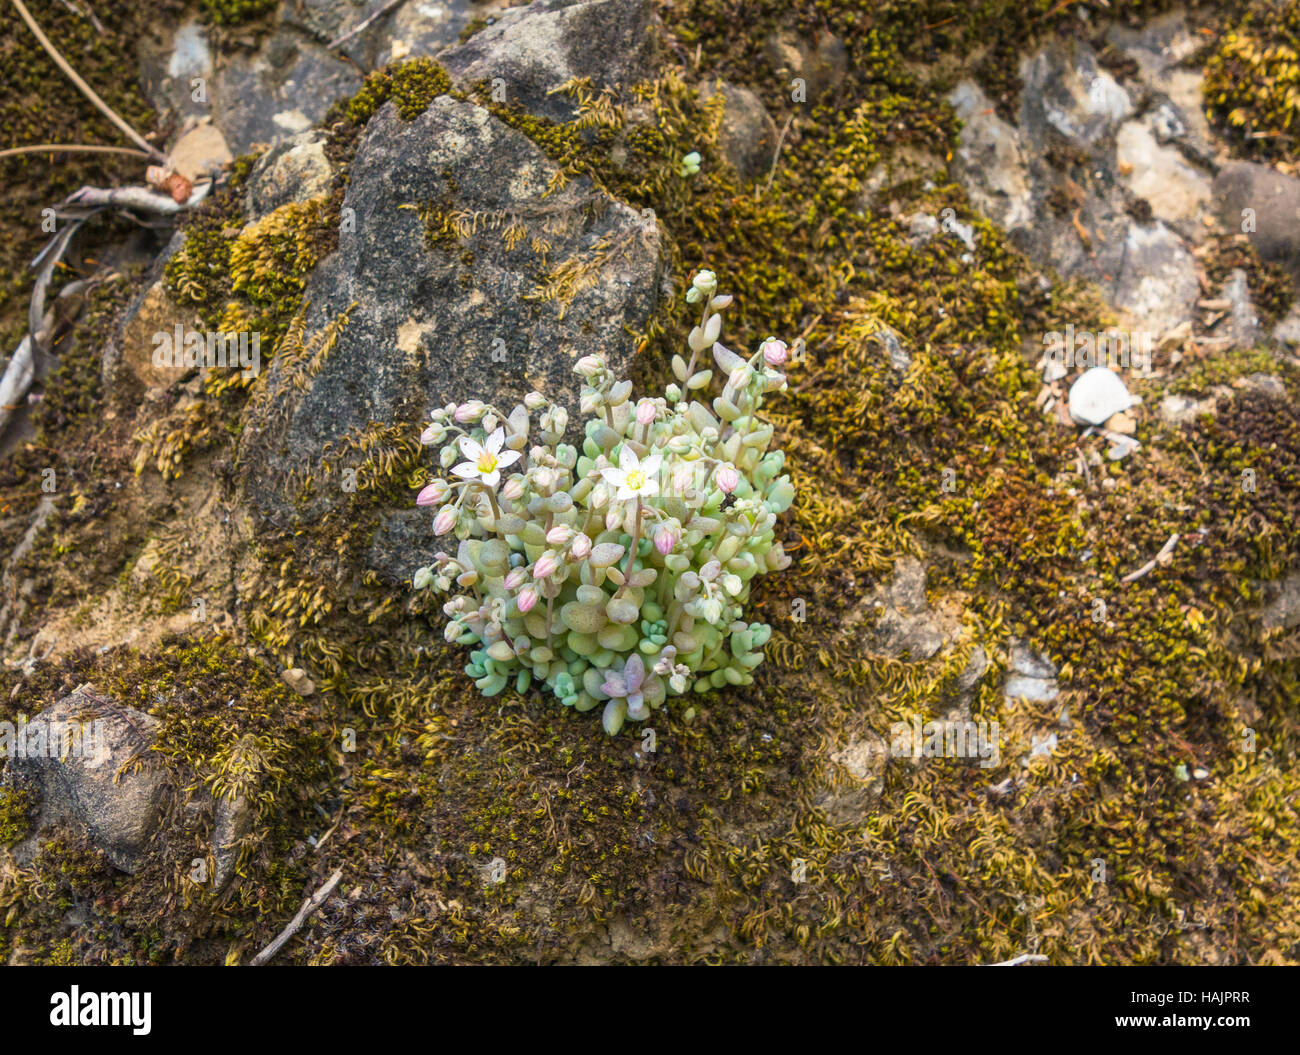 Sedum Album (White Stone Crop) growing on rock in the San Fruttuoso region of the Portofino National Park Italy Stock Photo